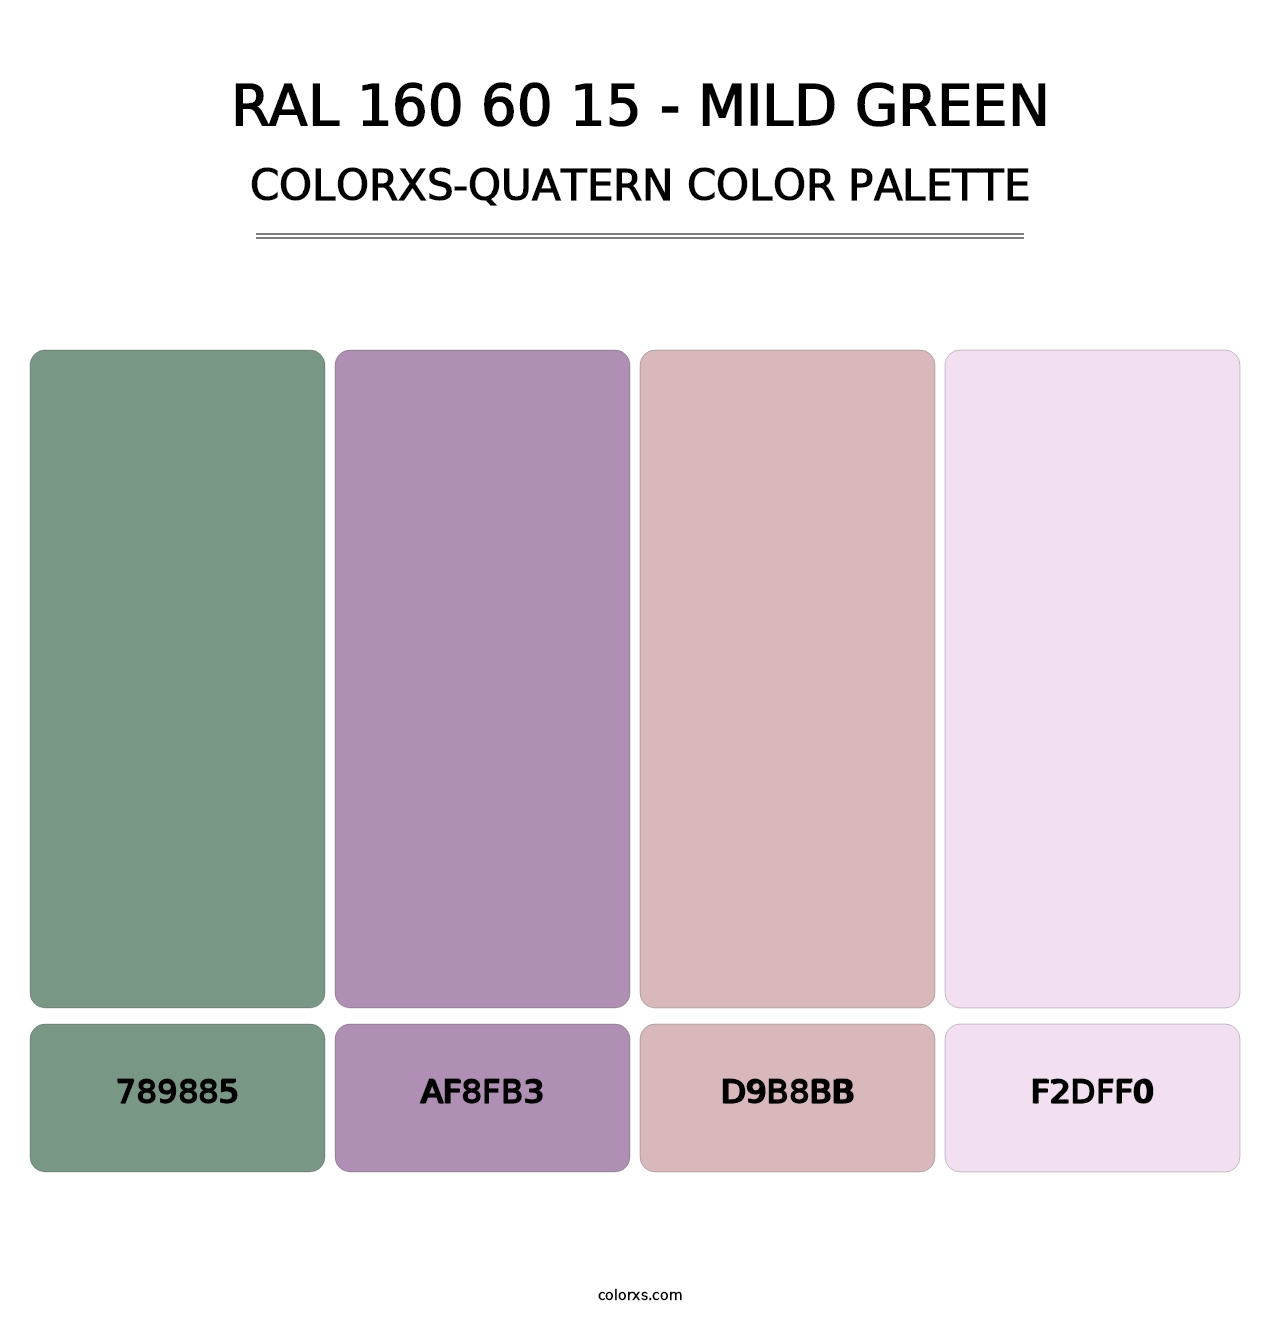 RAL 160 60 15 - Mild Green - Colorxs Quatern Palette